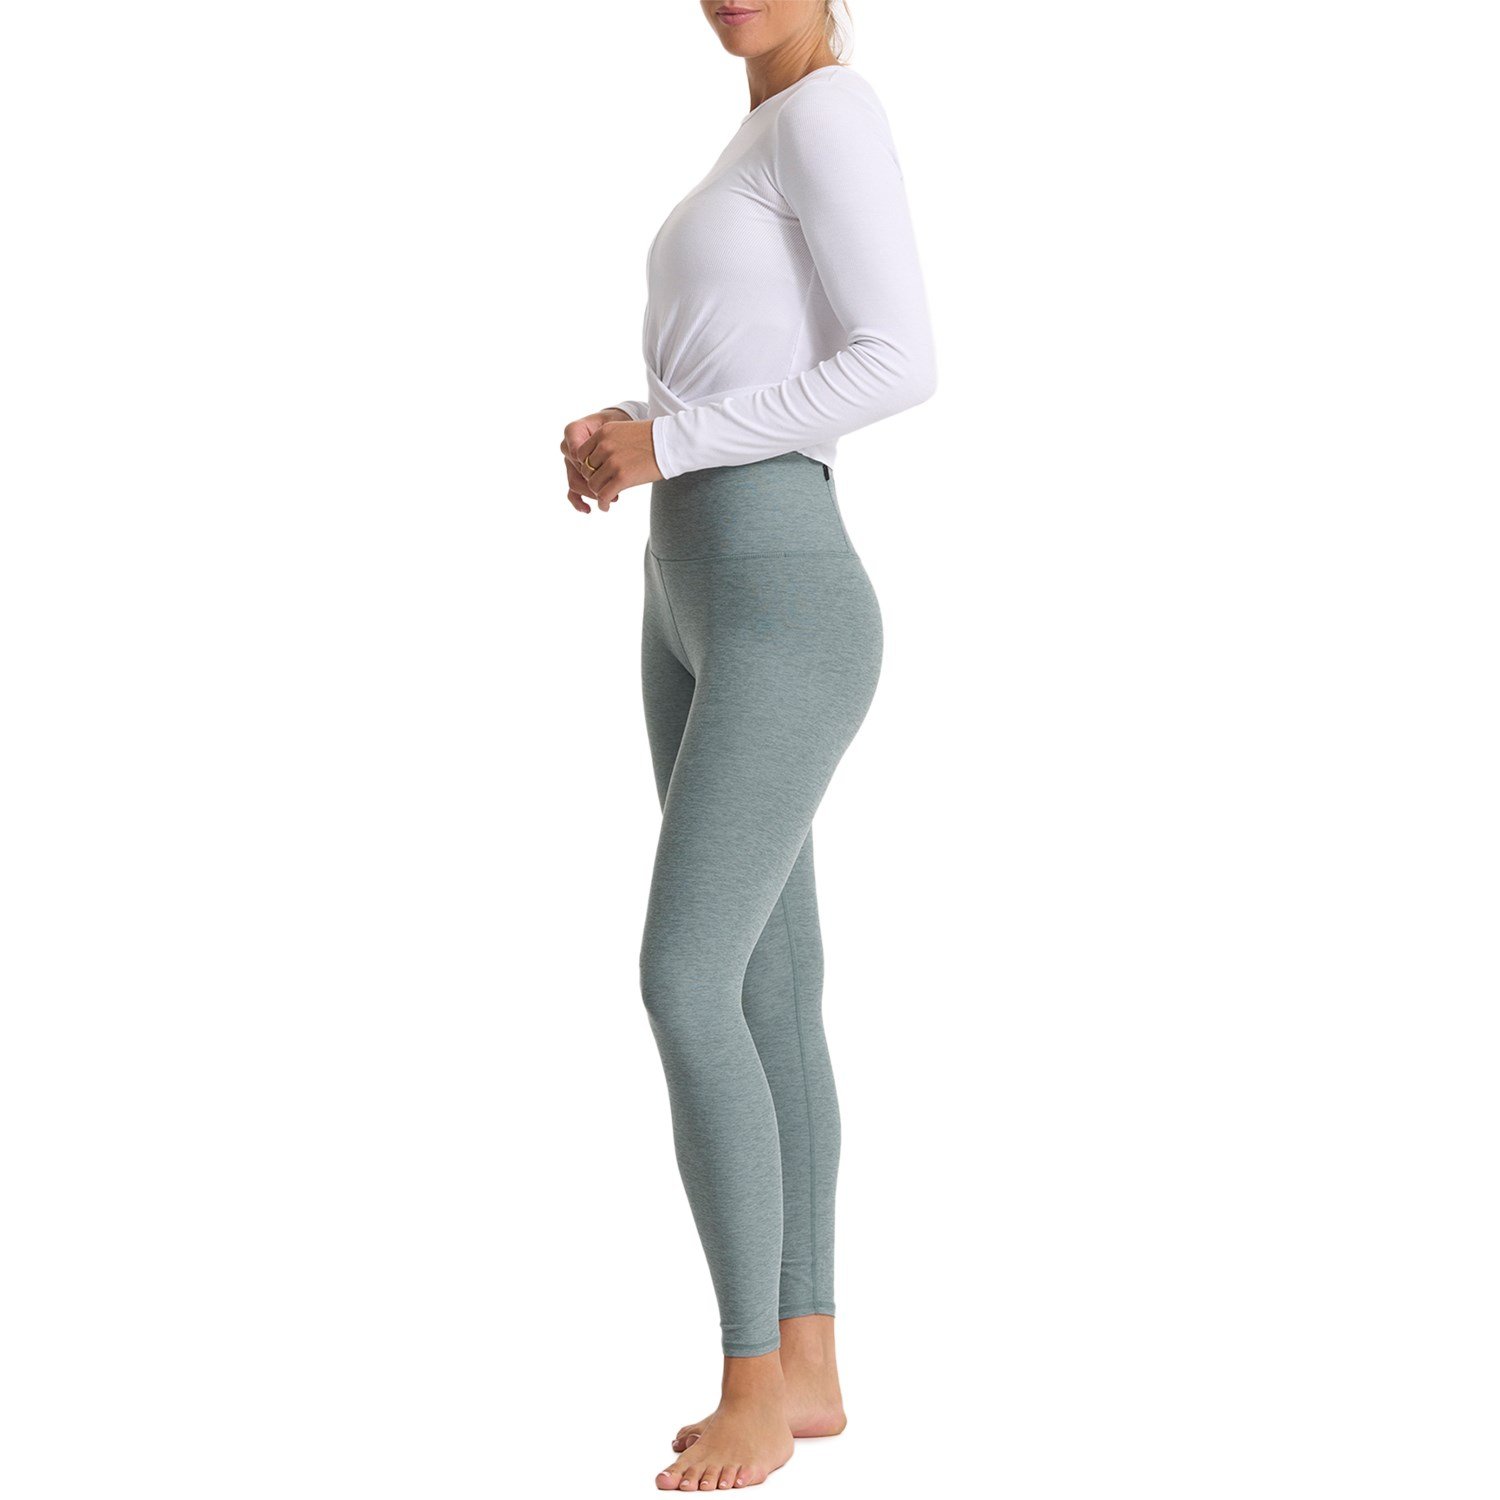 https://images.evo.com/imgp/zoom/206431/995013/vuori-clean-elevation-leggings-women-s-.jpg